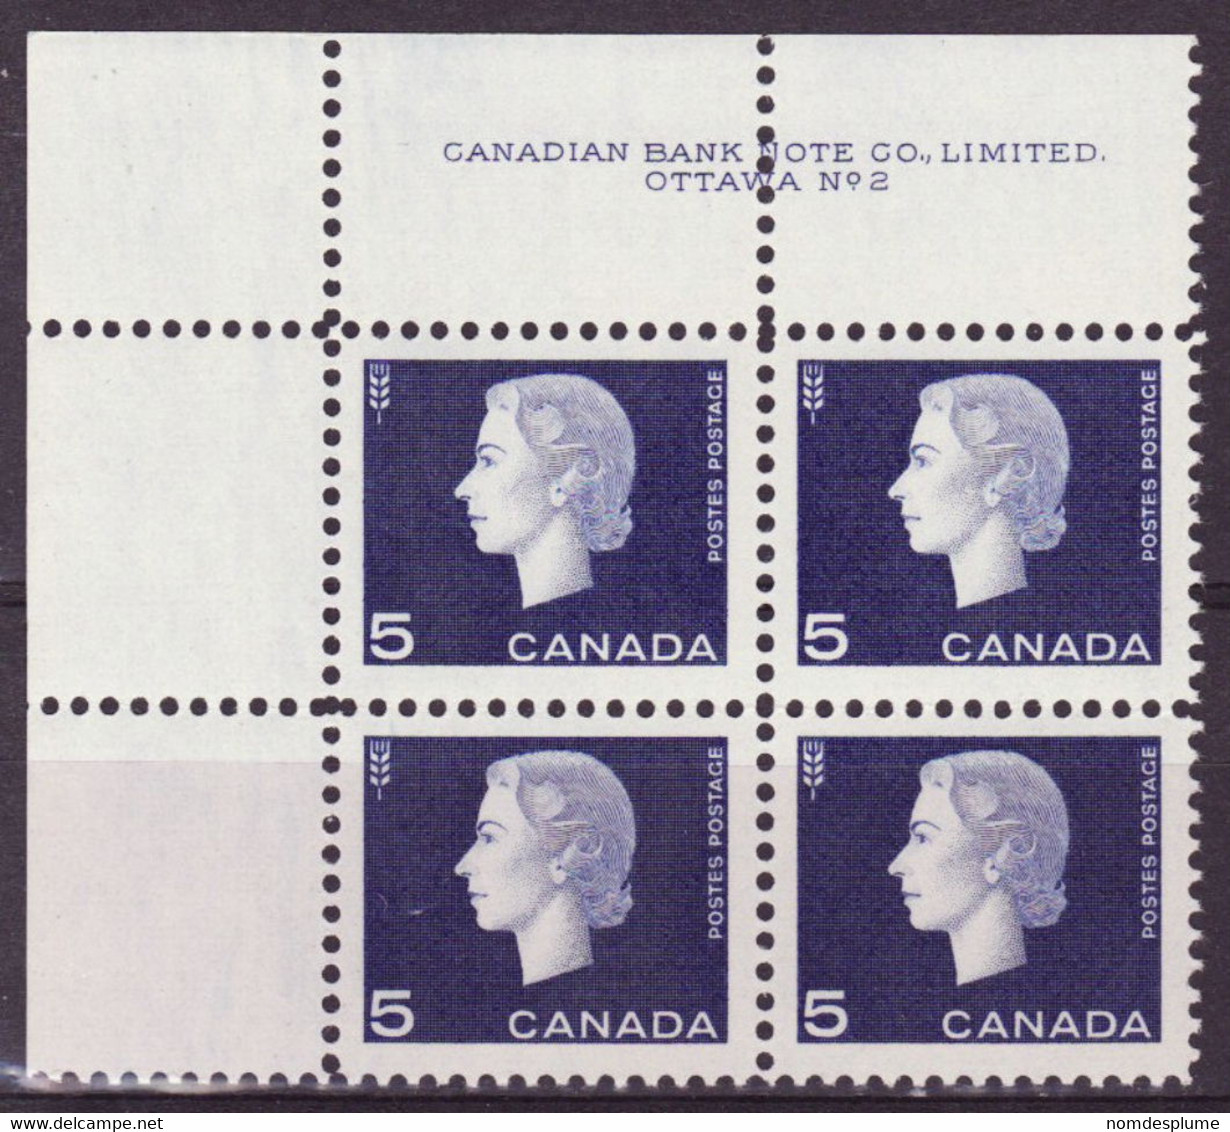 7909) Canada QE II Cameo Block Mint No Hinge Plate 2 - Plate Number & Inscriptions